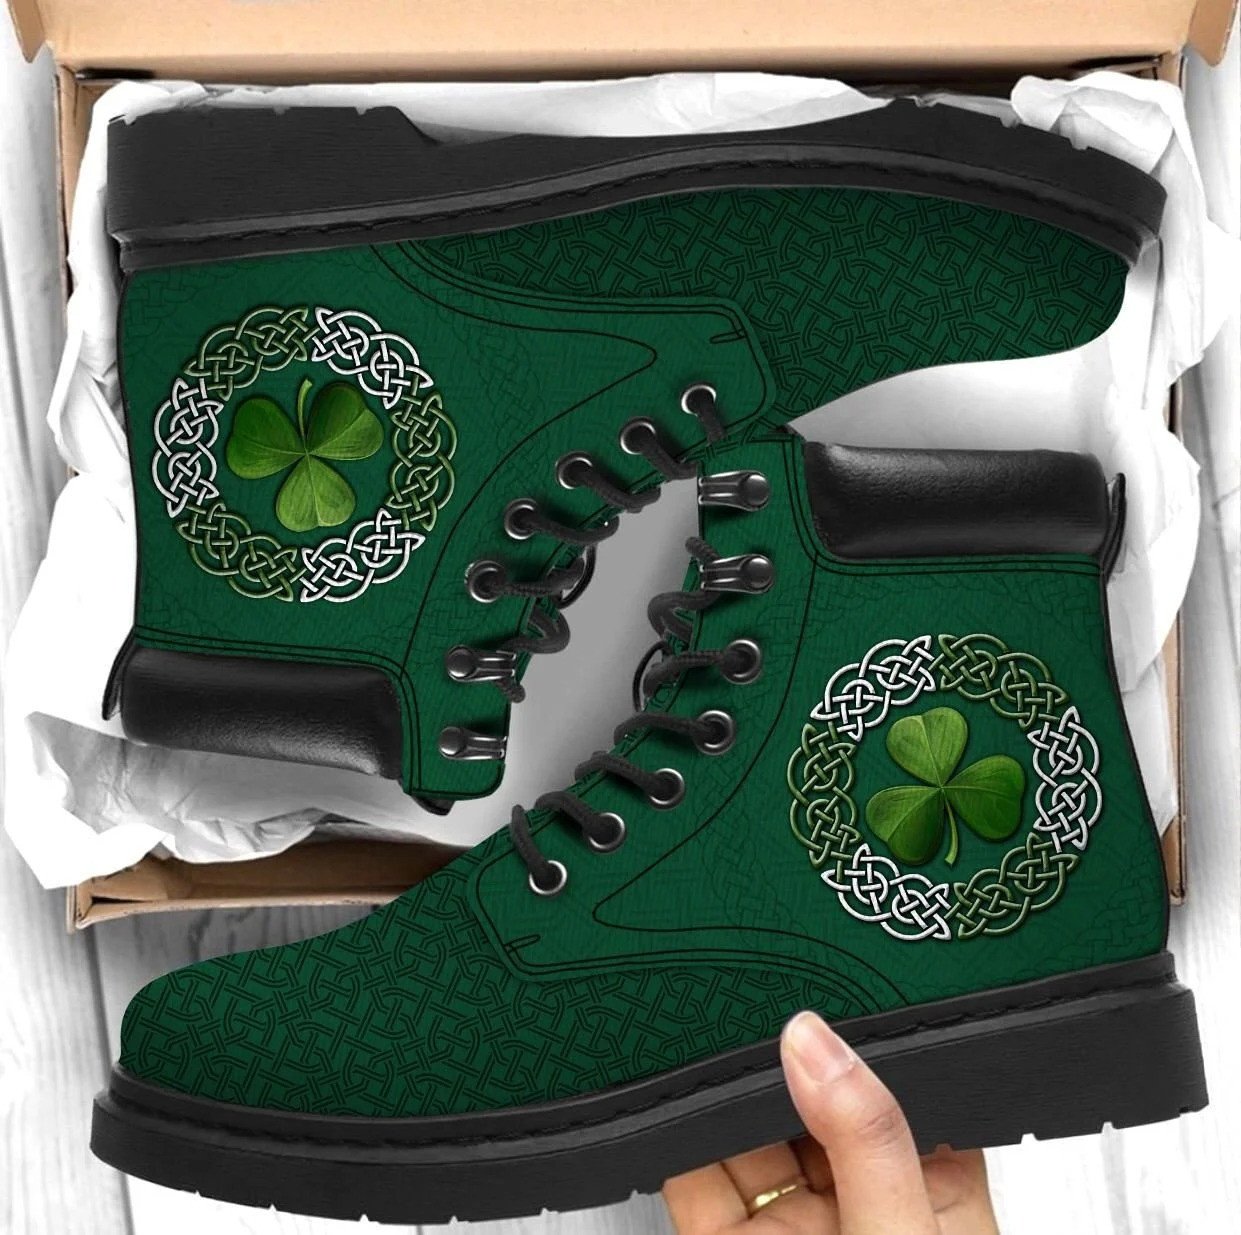 St Saint Patrick's Day Outfit 3D Irish Boots Shoes Clover Shamrock PANCBO0034